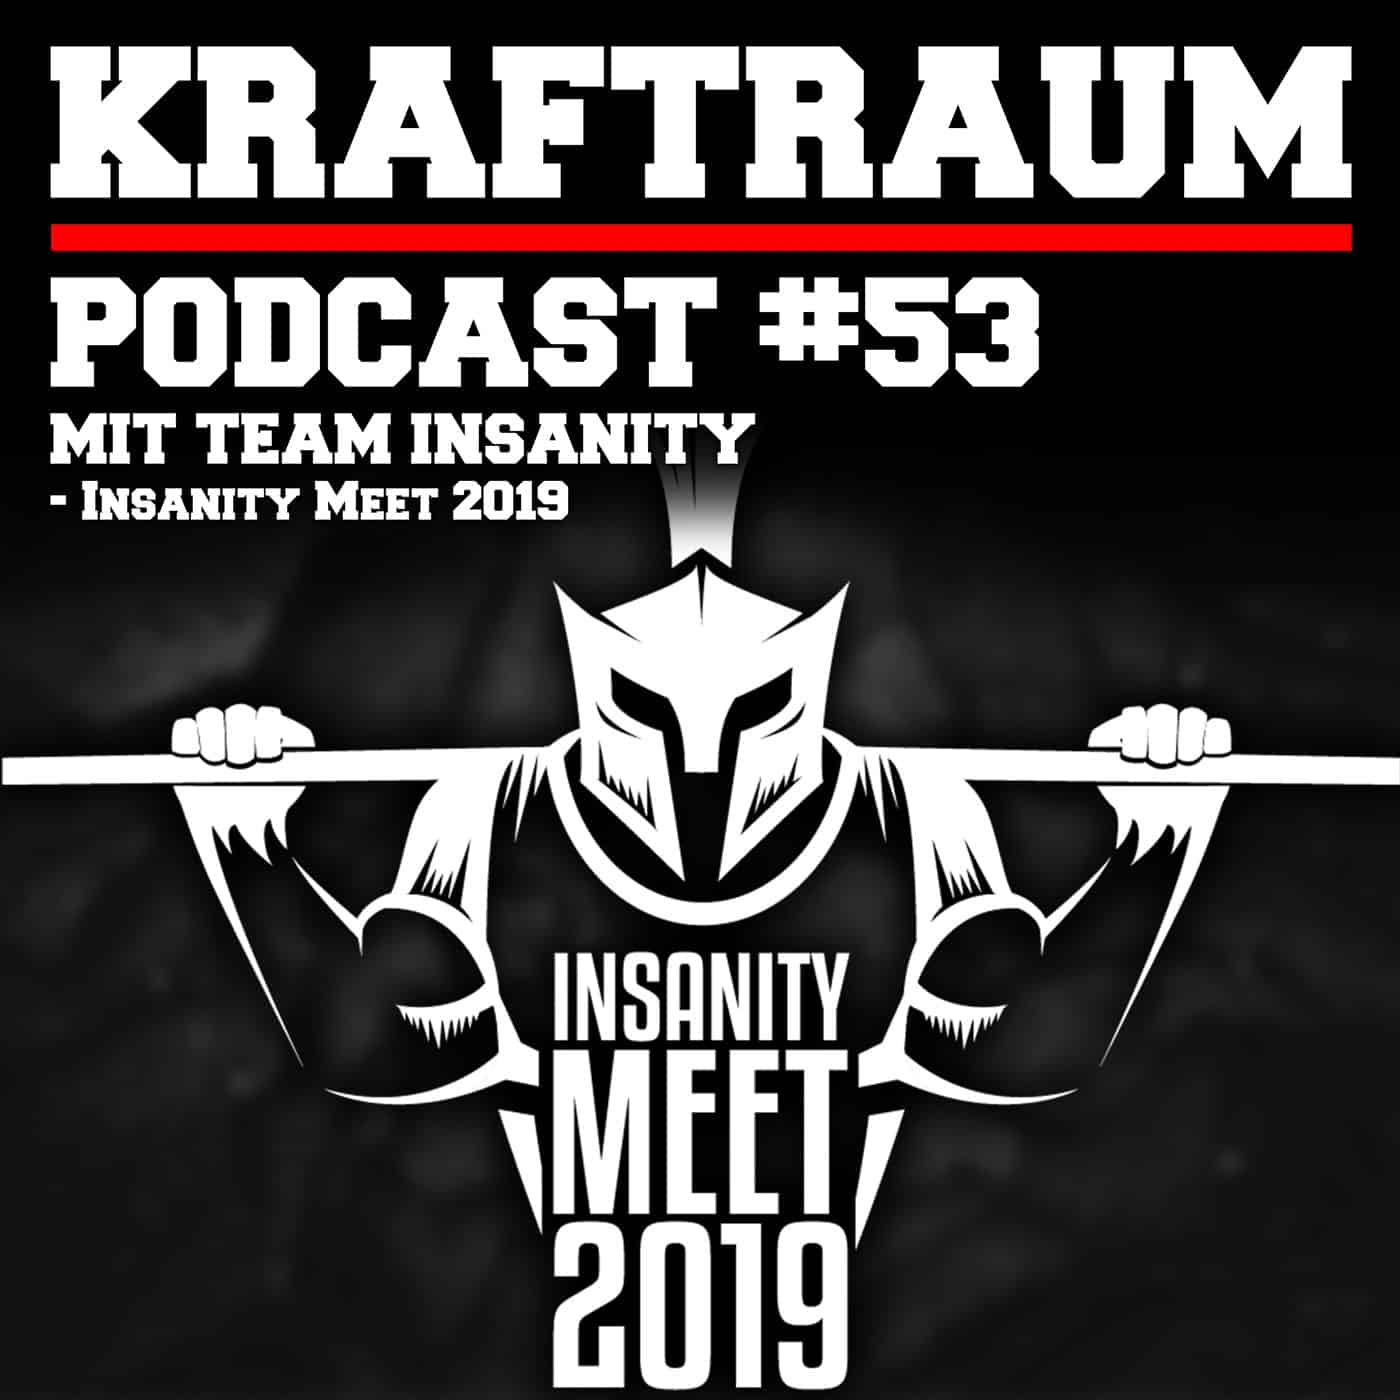 Insanity Meet 2019 mit Team Insanity (#53)